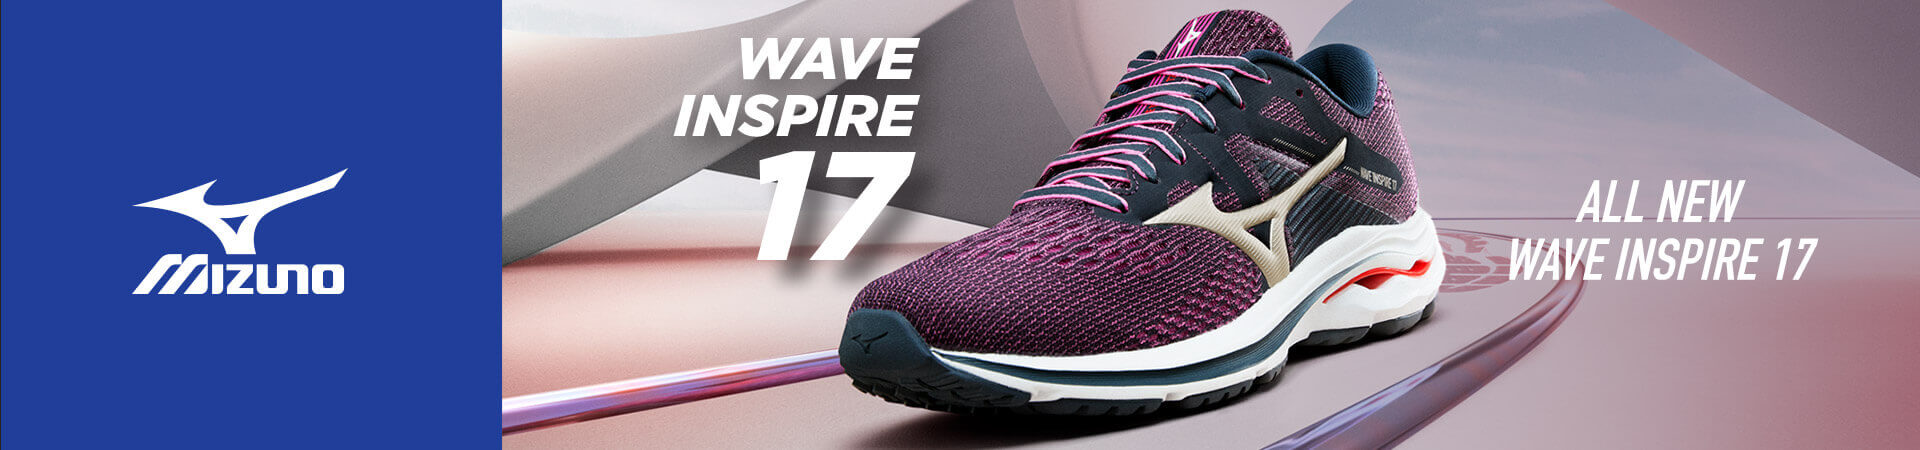 Mizuno Wave inspire running shoes